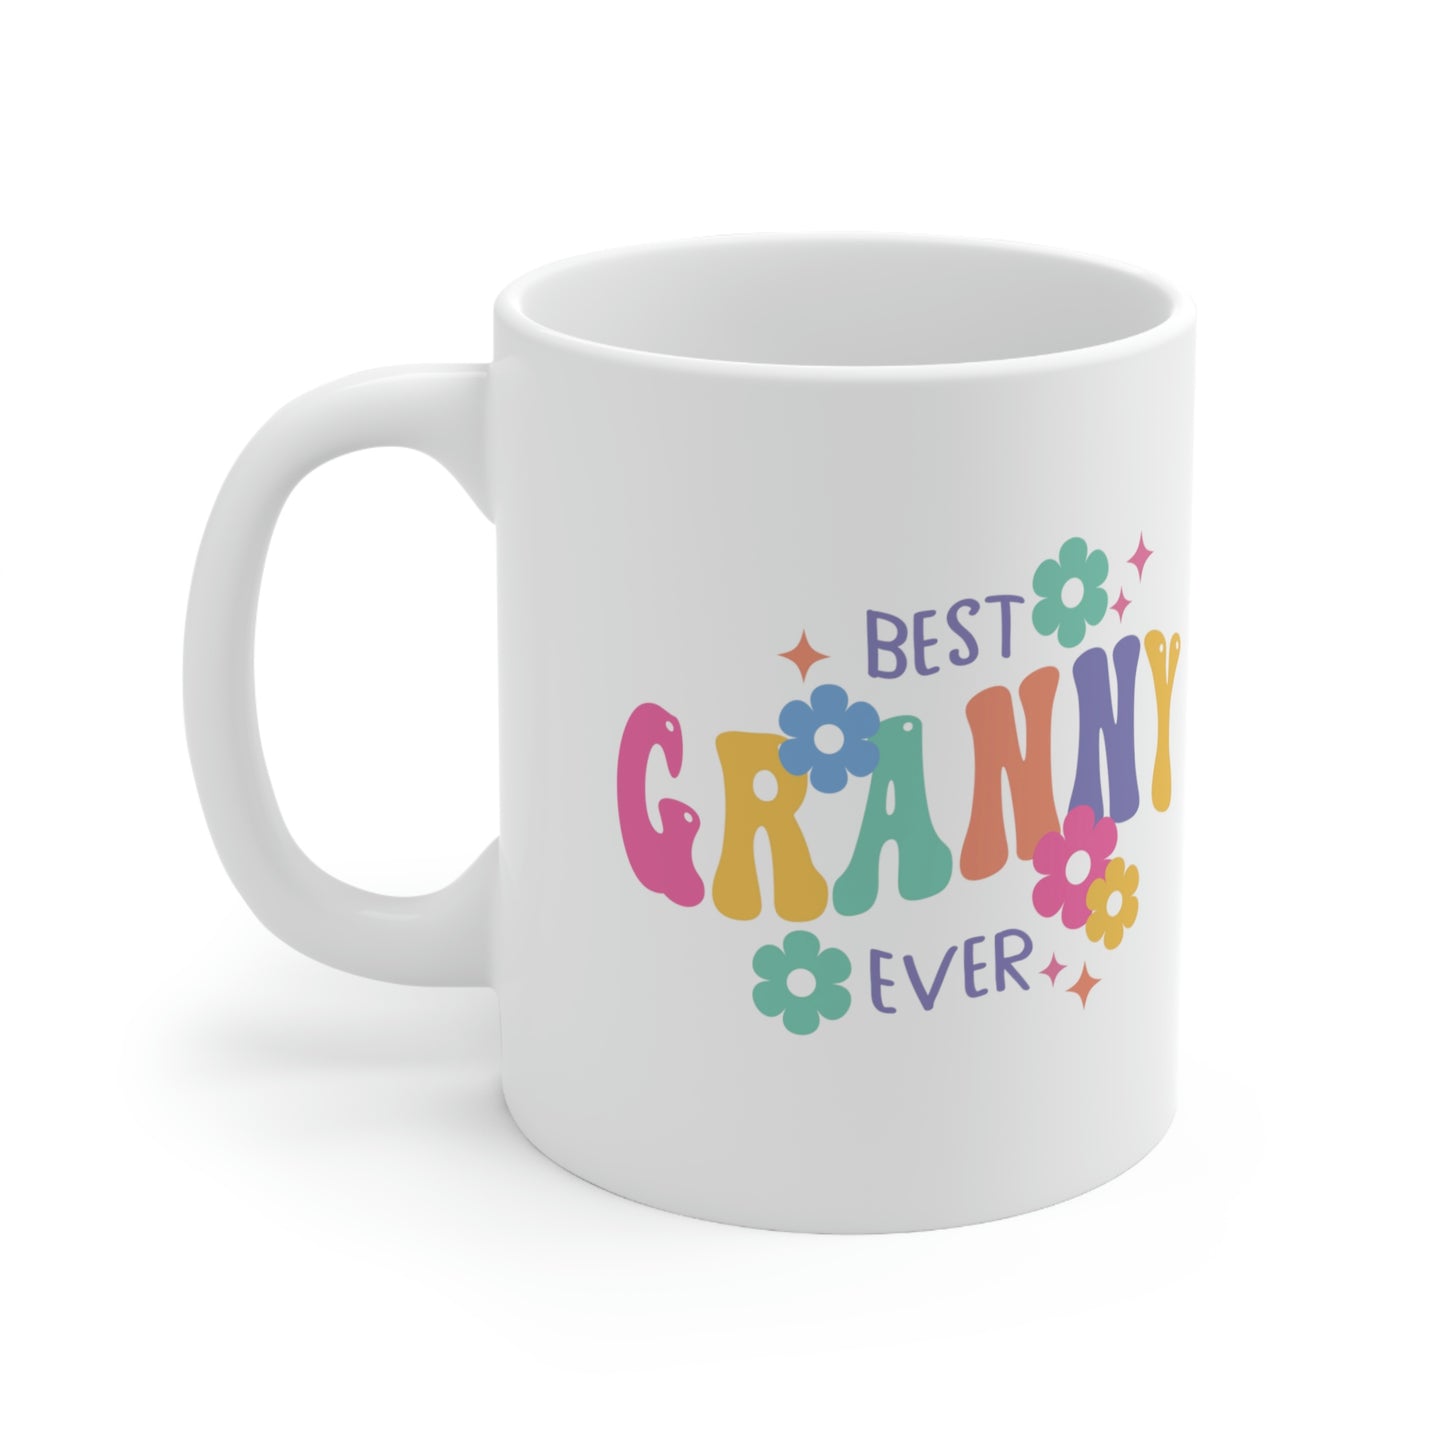 Best Granny Ever Ceramic Mug 11oz, Mothers Day Gift